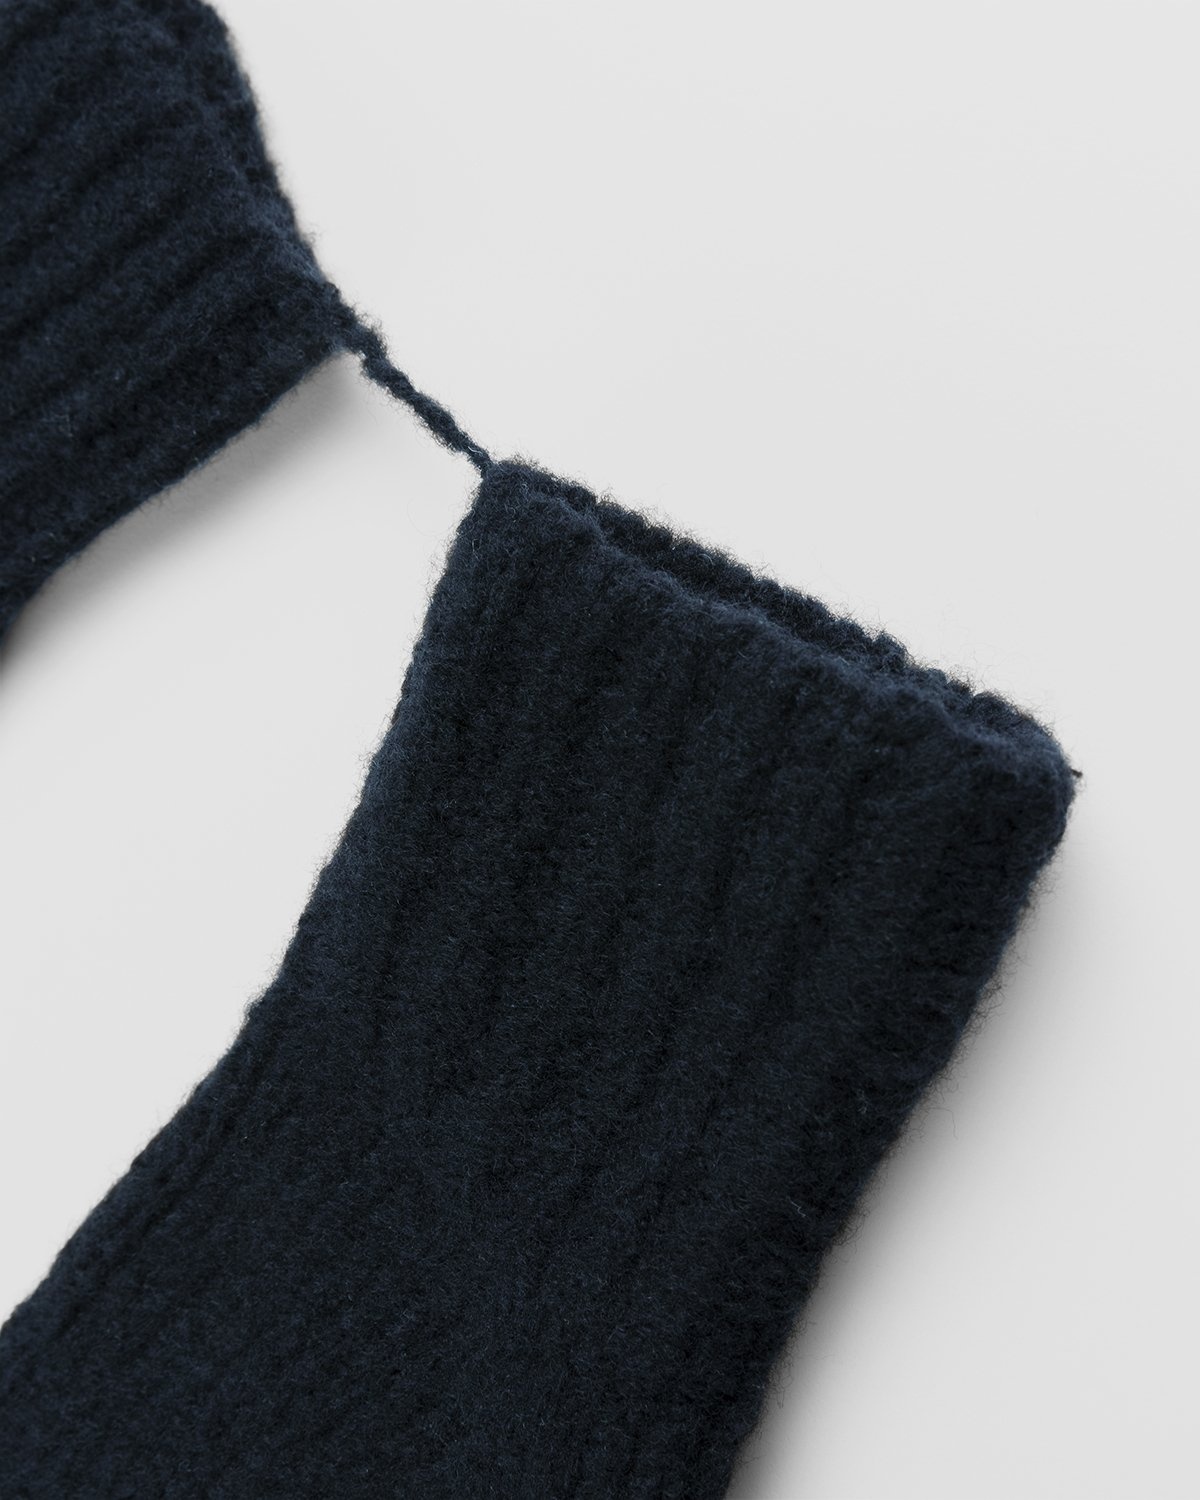 Acne Studios – Wool Blend Mittens Black - Mittens - Black - Image 3